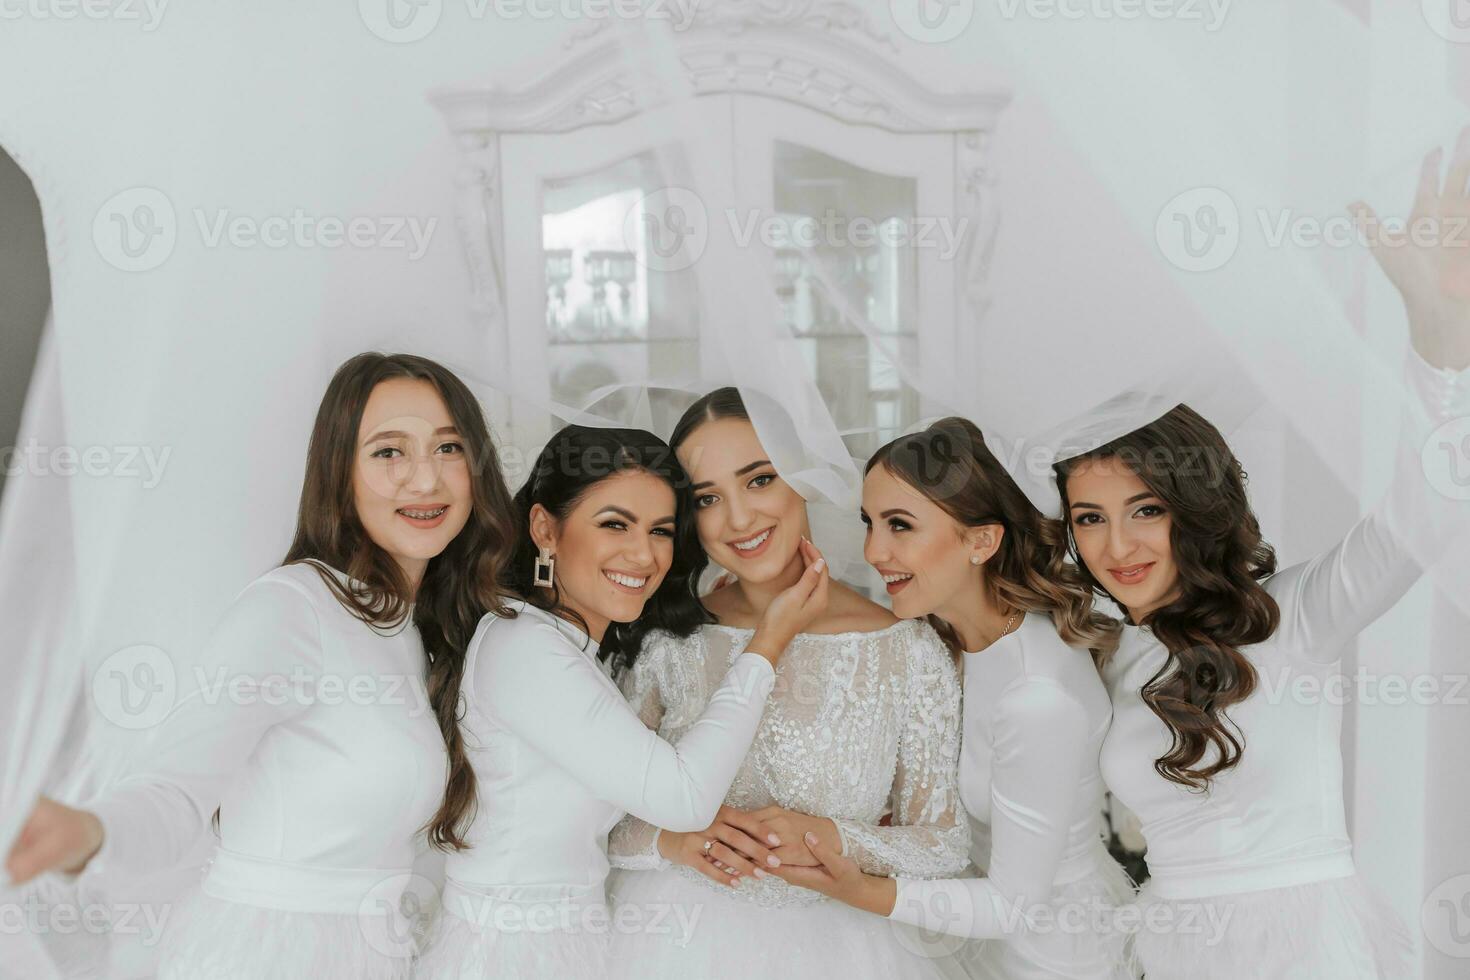 jong bruidsmeisjes in wit zijde jurken knuffel en verheugen in de bruid kamer. mooi Dames vieren vrijgezellin partij staand in kamer. foto